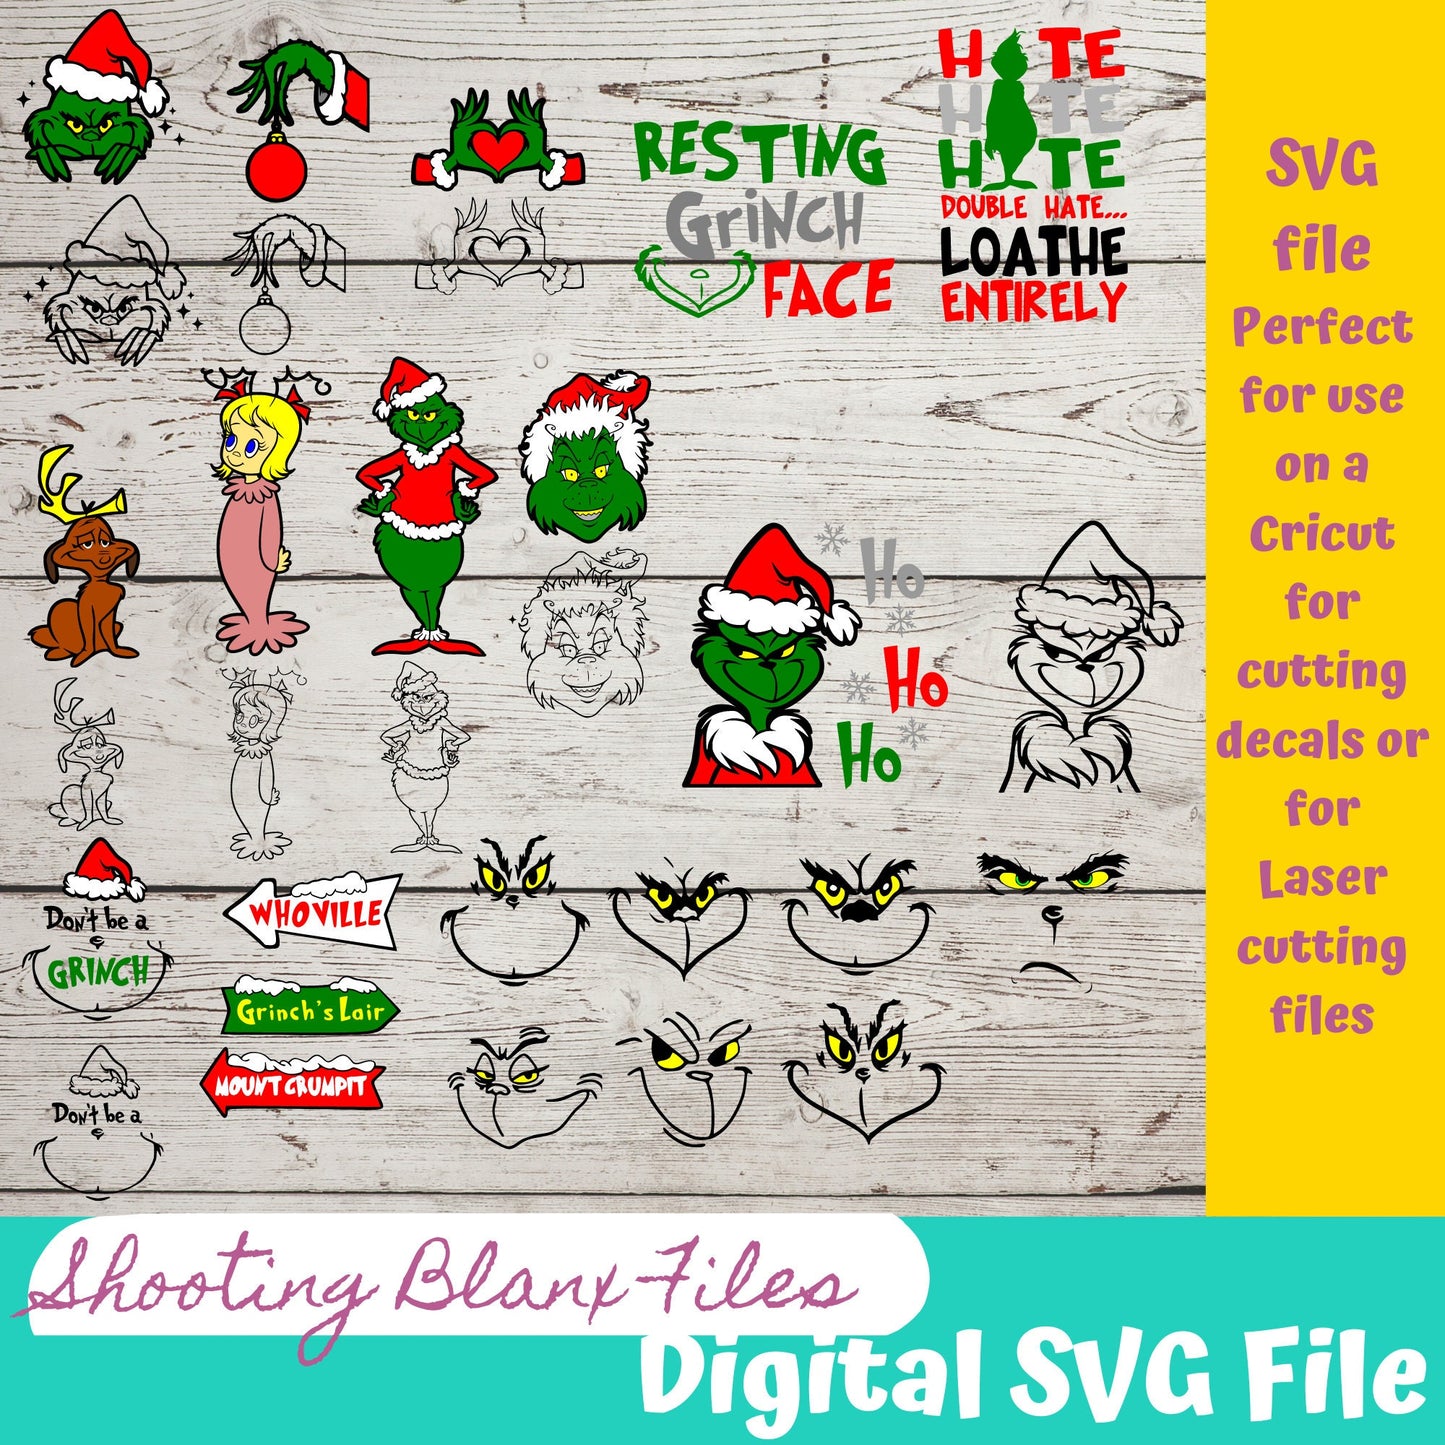 Grinch Christmas SVG Files | Holiday SVG | Glowforge Grinchmas Cut File | Digital File, Cindy Lou